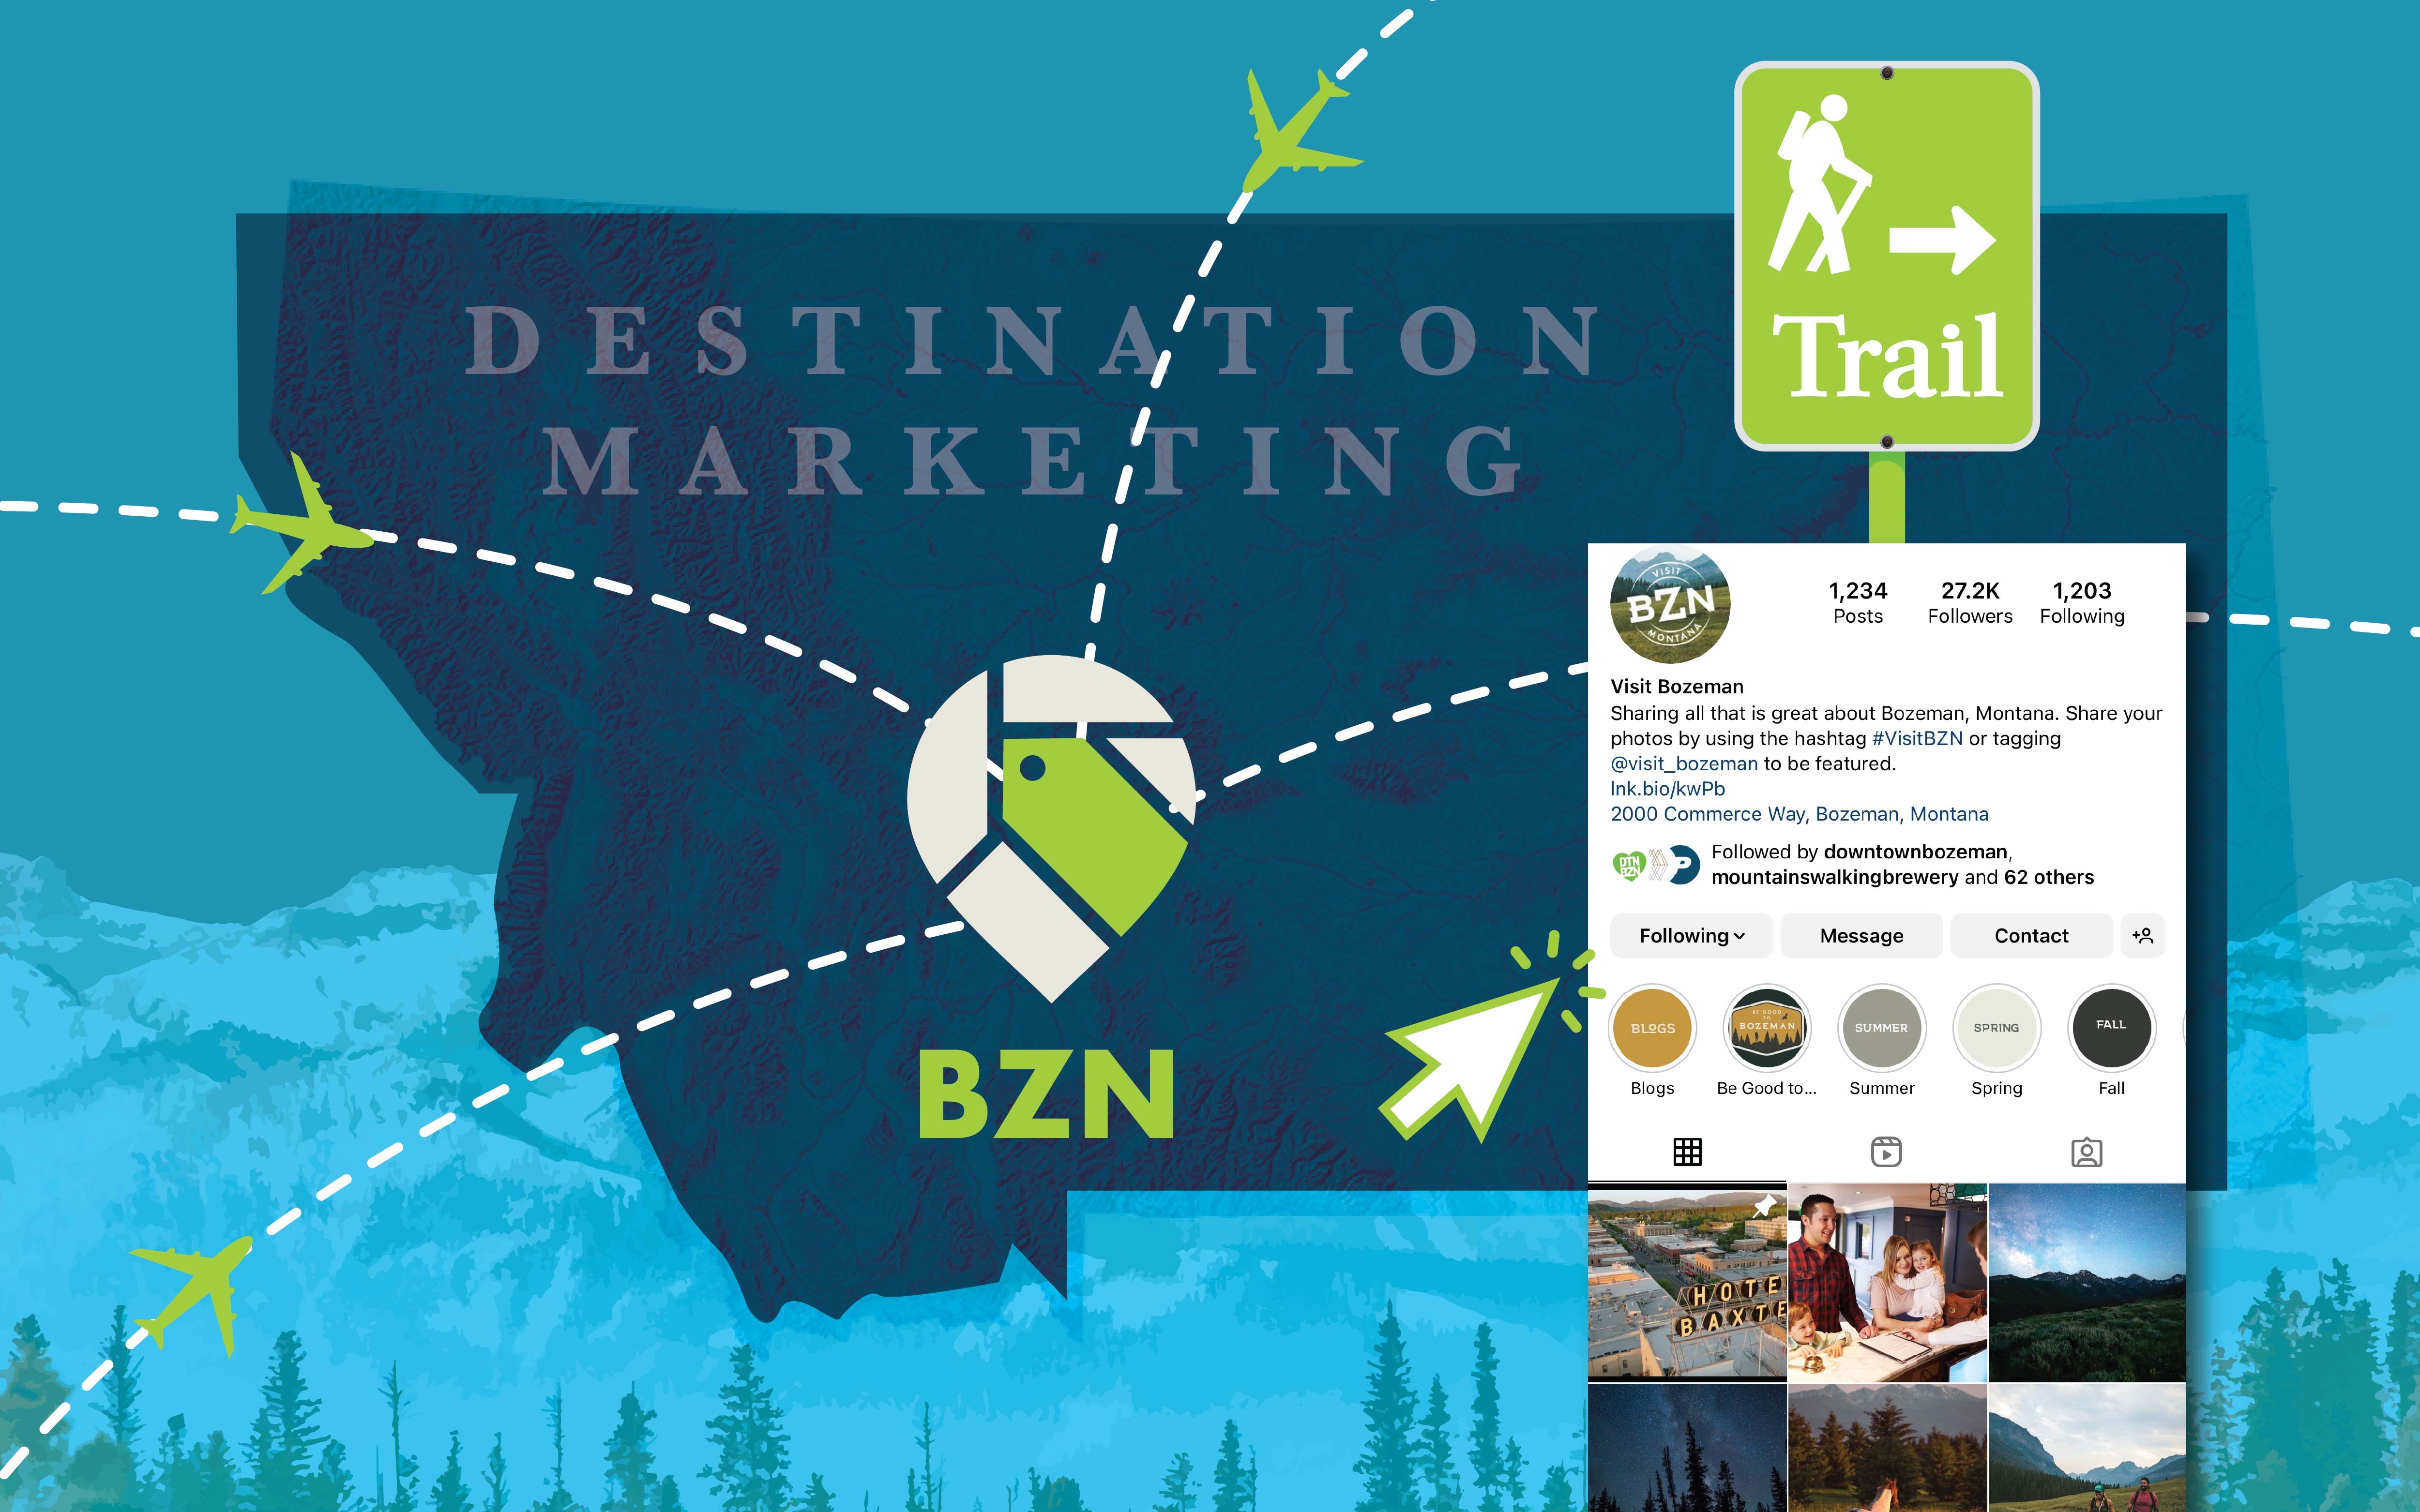 Digital marketing for destination marketing organizations